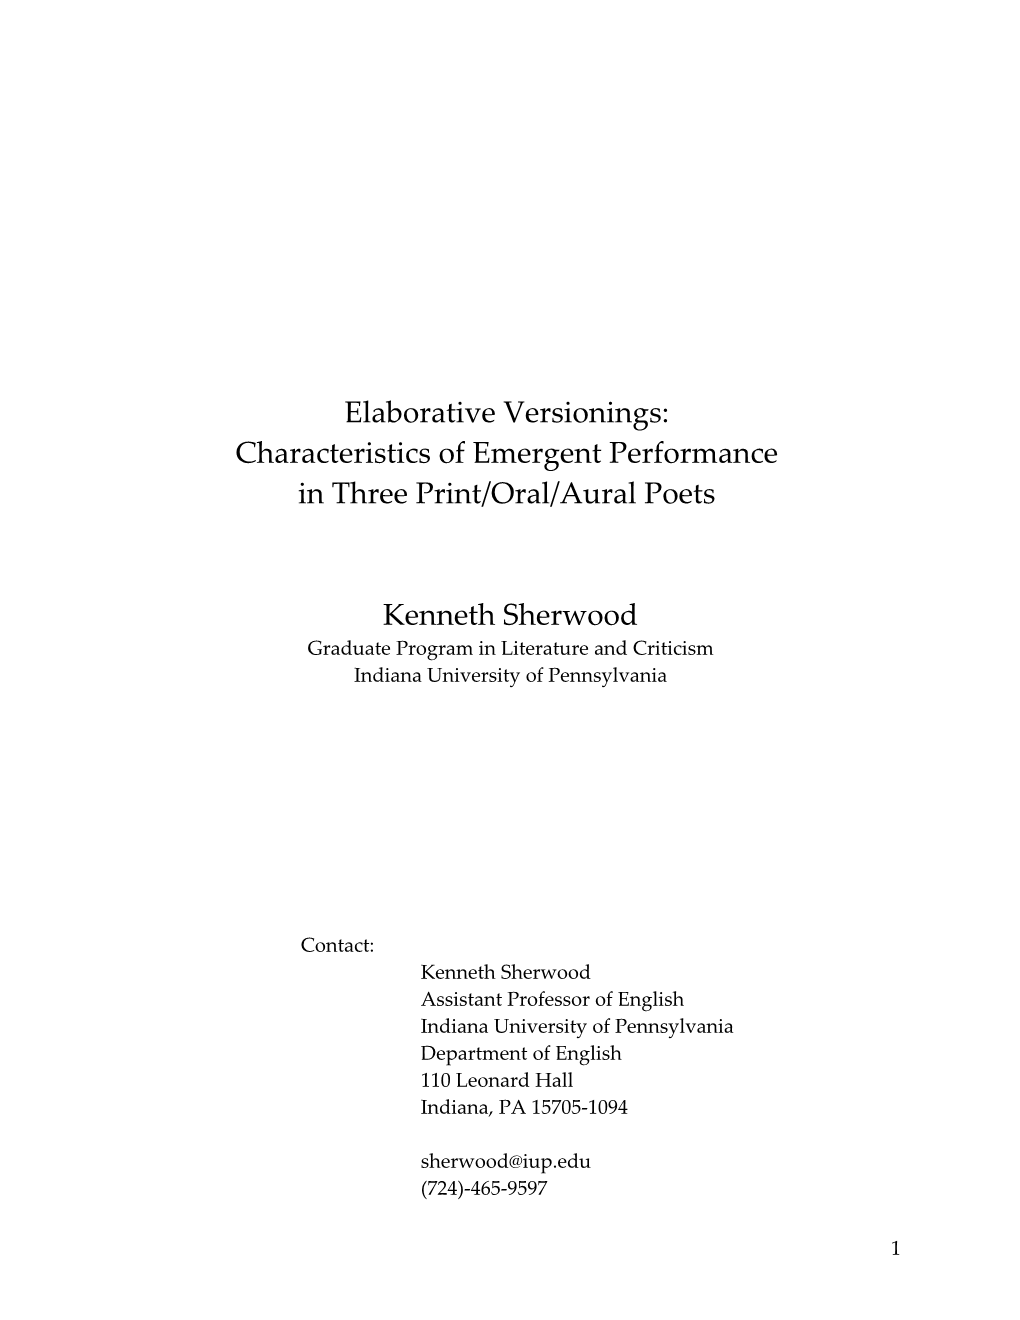 Sherwood - Elaborative Versionings: Oral/Aural Poetics in Baraka, Brathwaite, and Vicuña